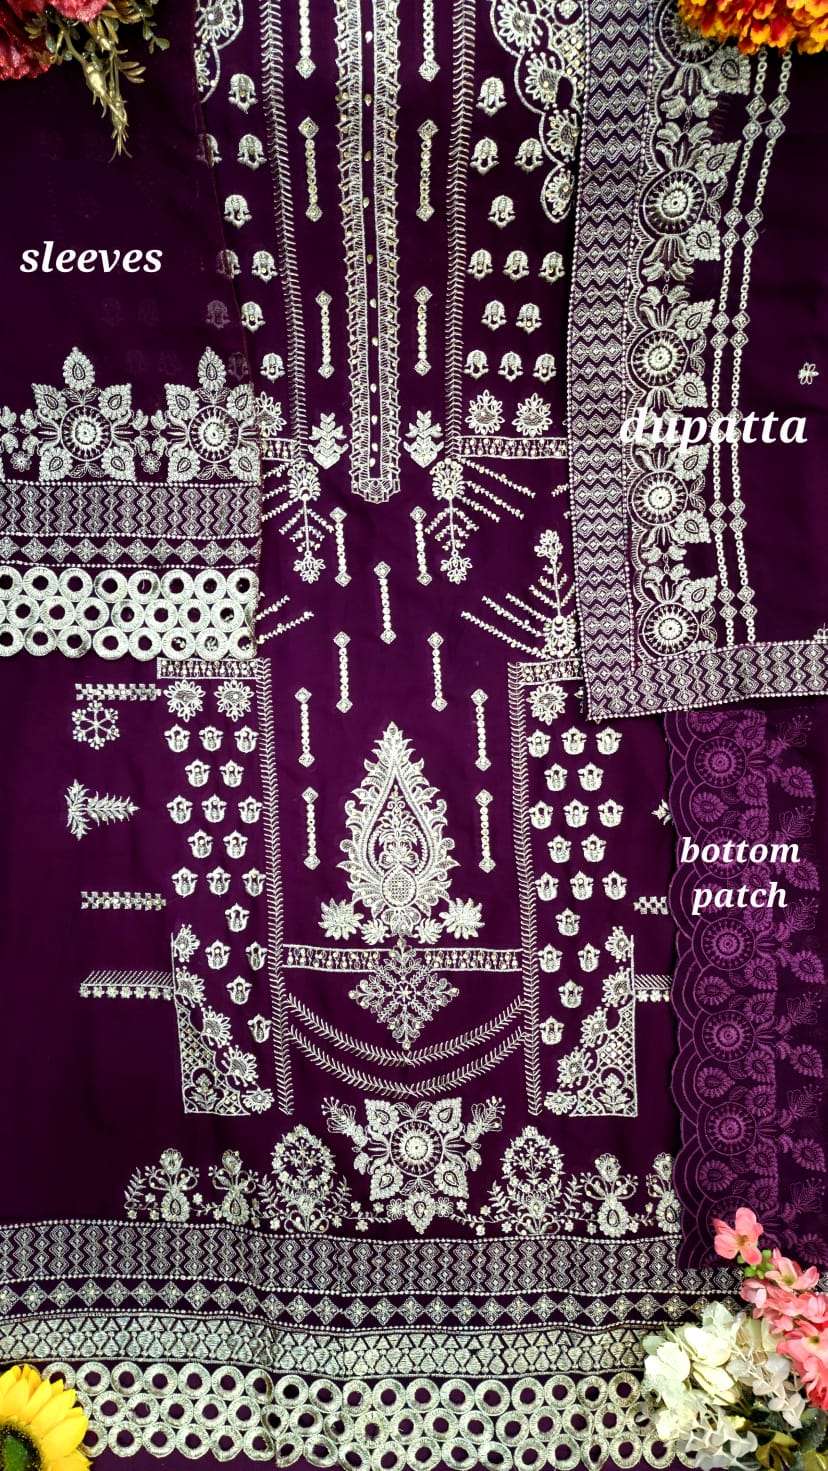 rungrez by reshamghar r-4 colours georgette embroidered salwar kameez wholesale price surat